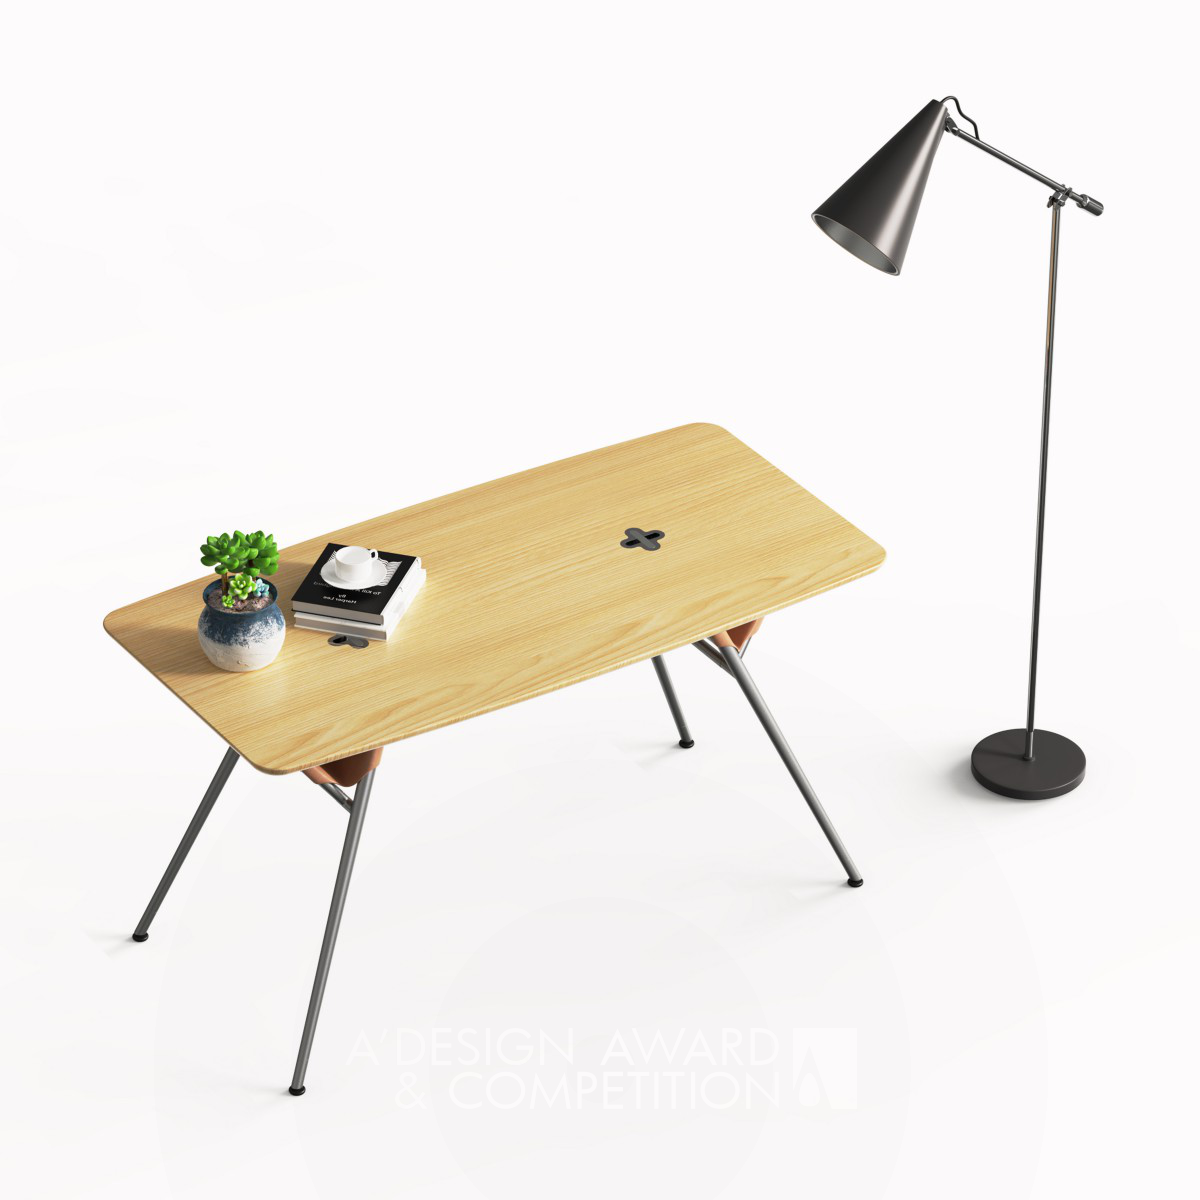 Double Ten Desk by Le Xu Iron Furniture Design Award Winner 2022 